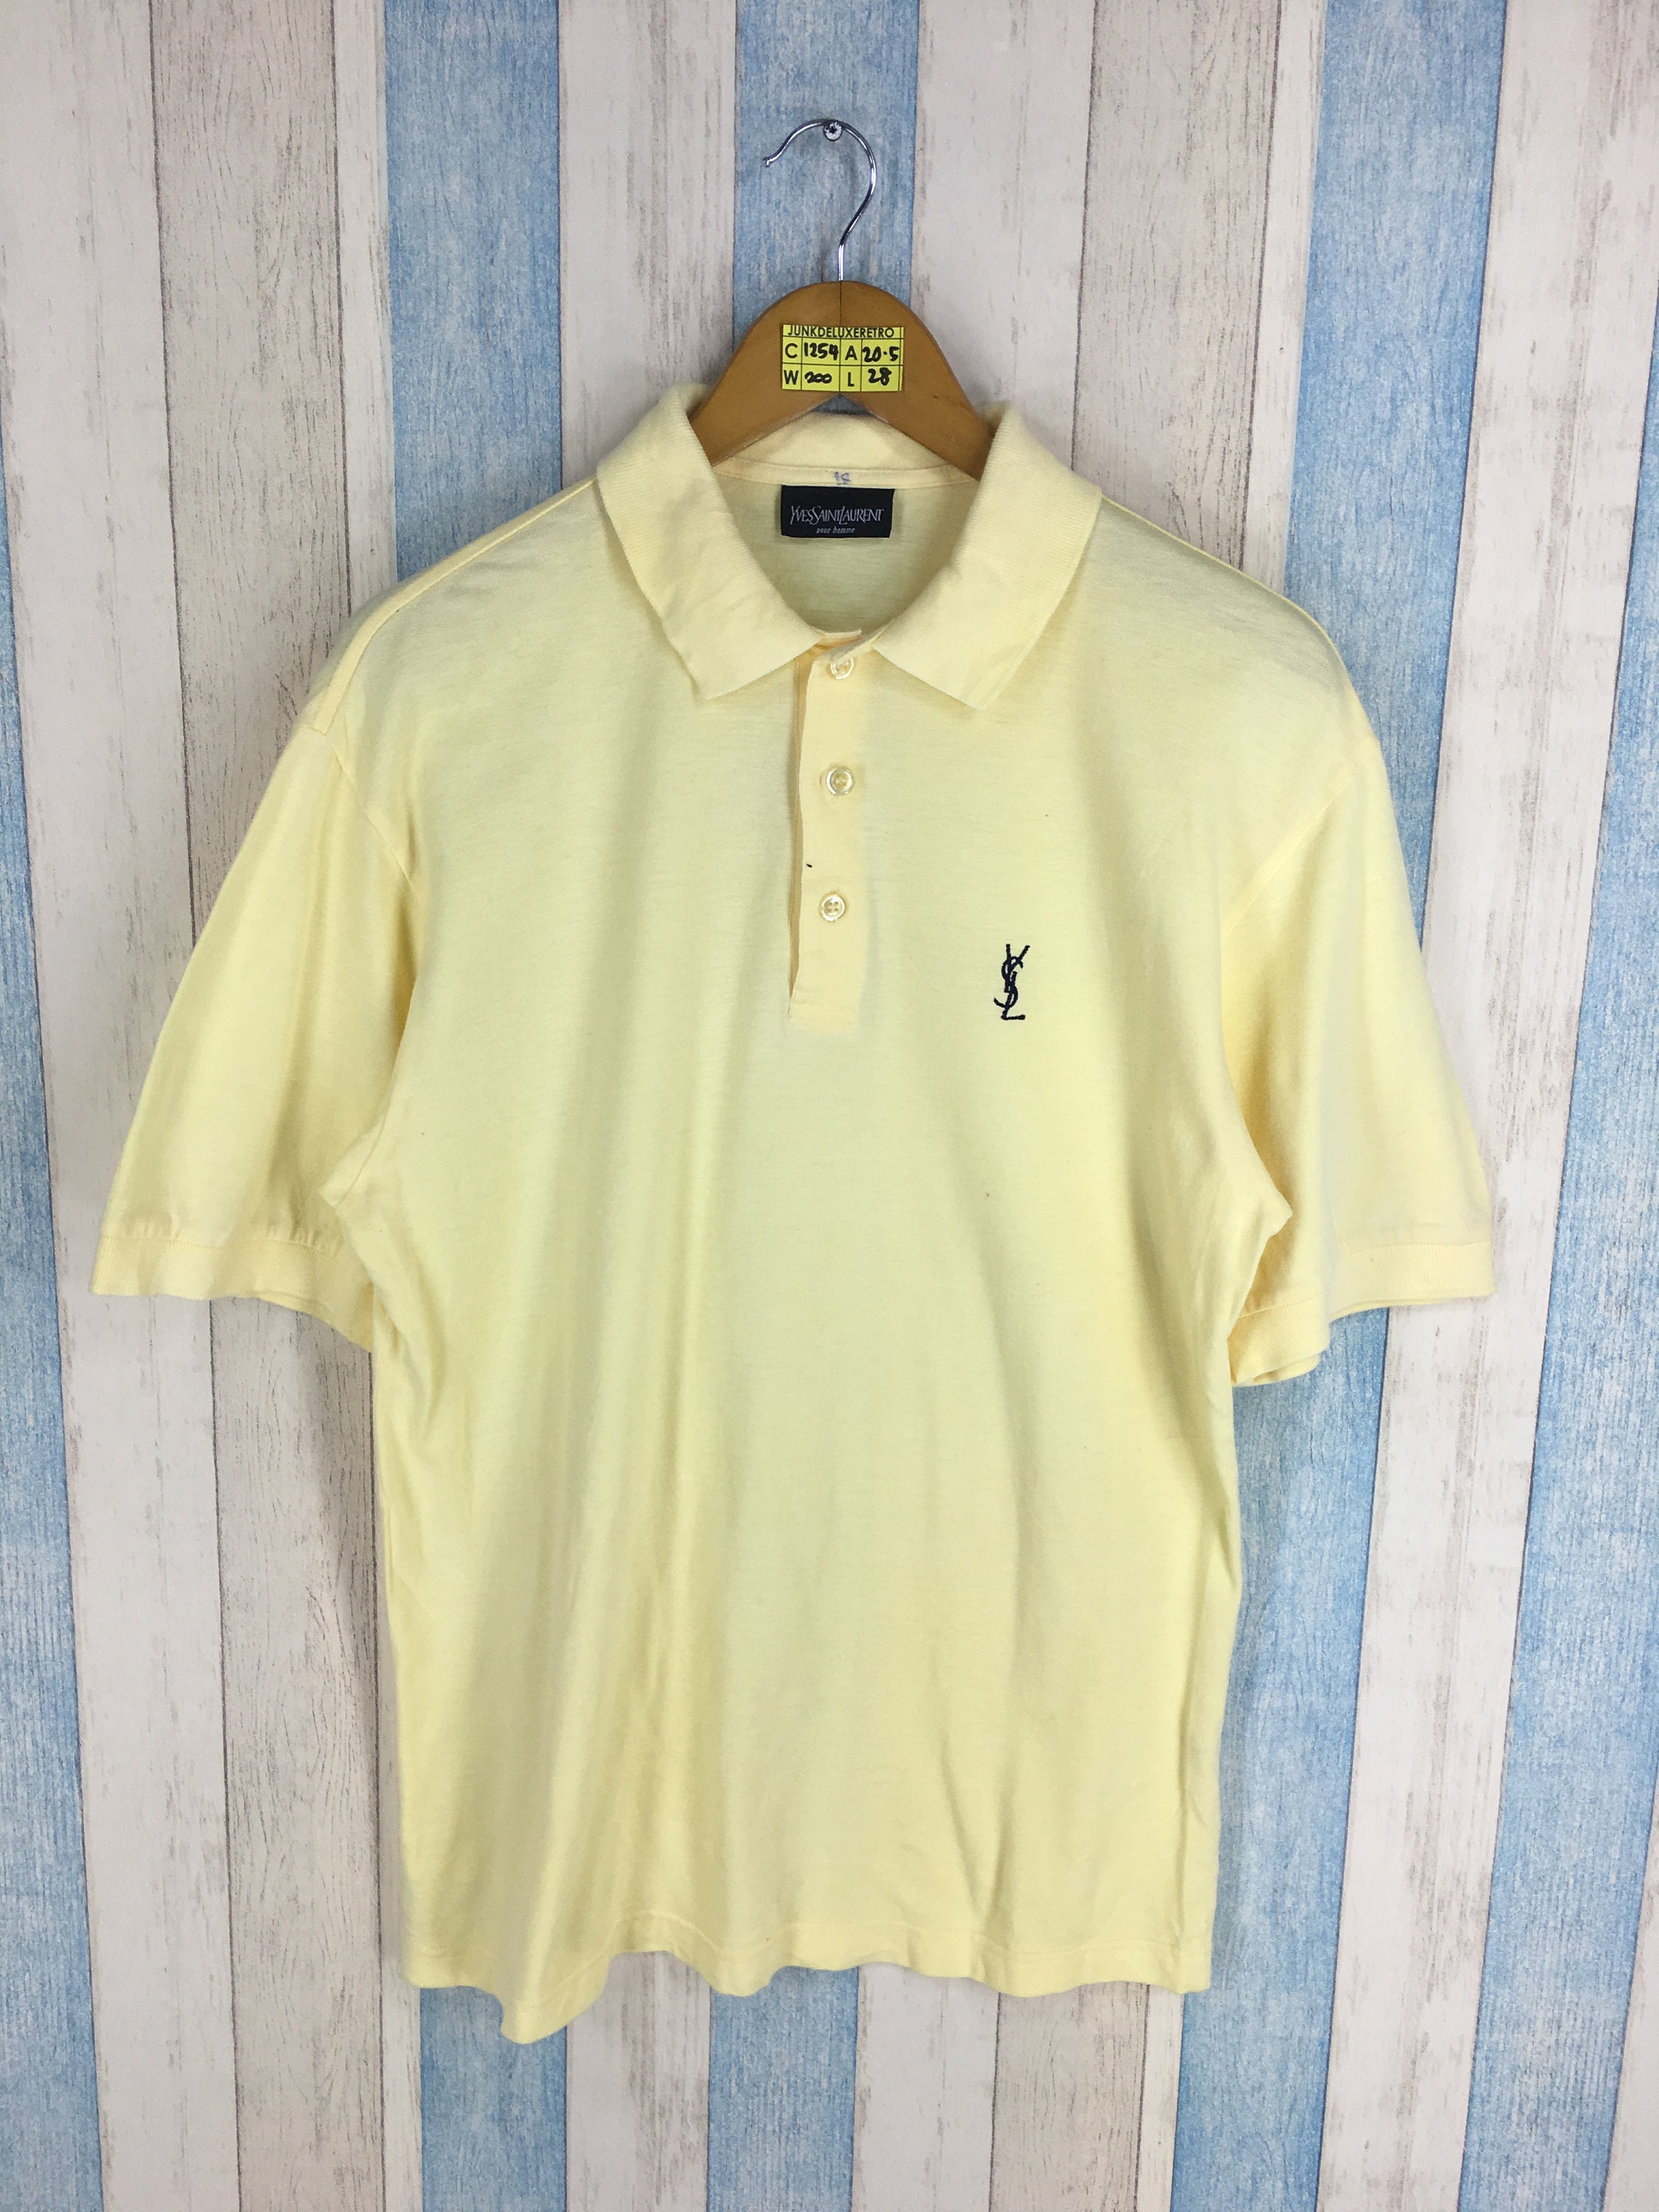 plain yellow polo shirt